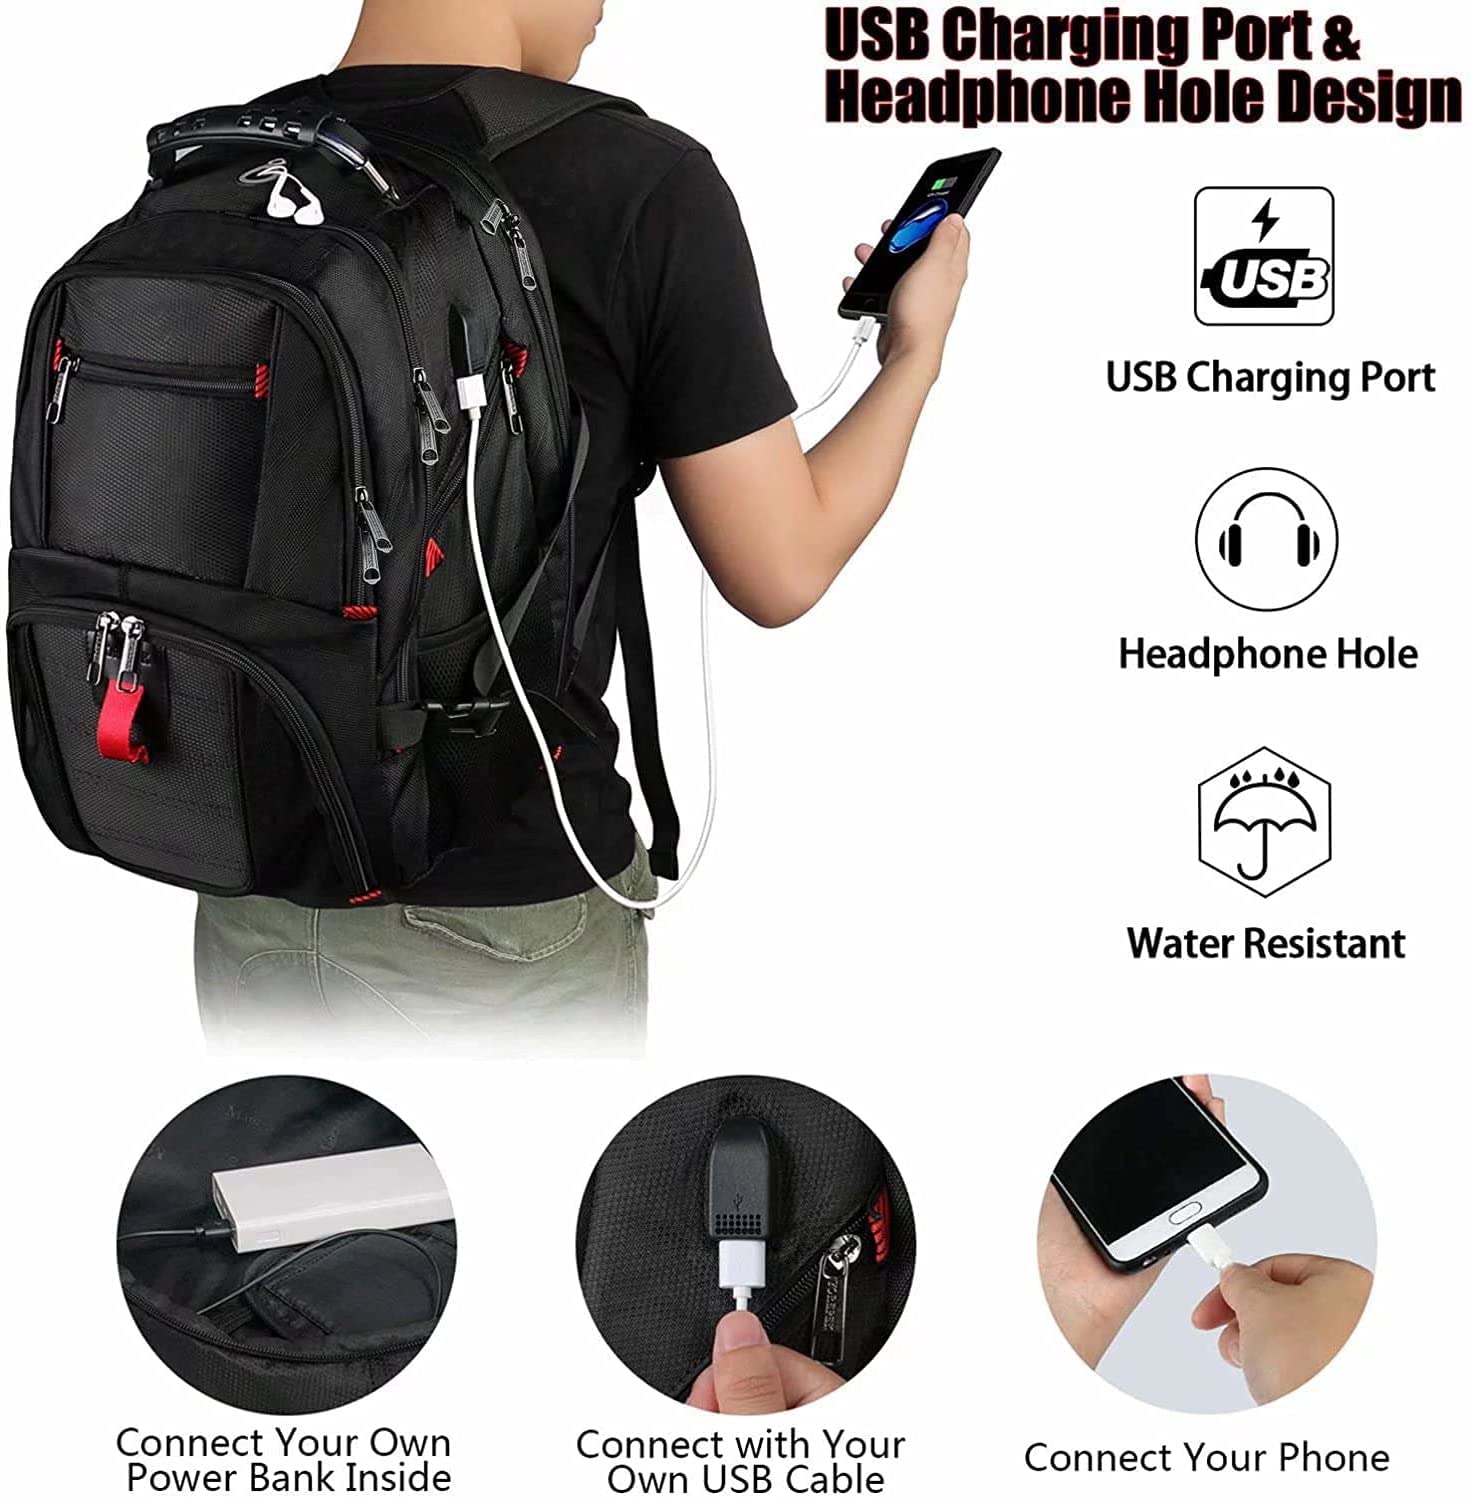 YOREPEK Travel Backpack & Soccer Backpack, Lightweight Soccer Bag with Ball Holder, Extra Large 50L Laptop Backpacks for Men Women, Water resistant Bag, Black